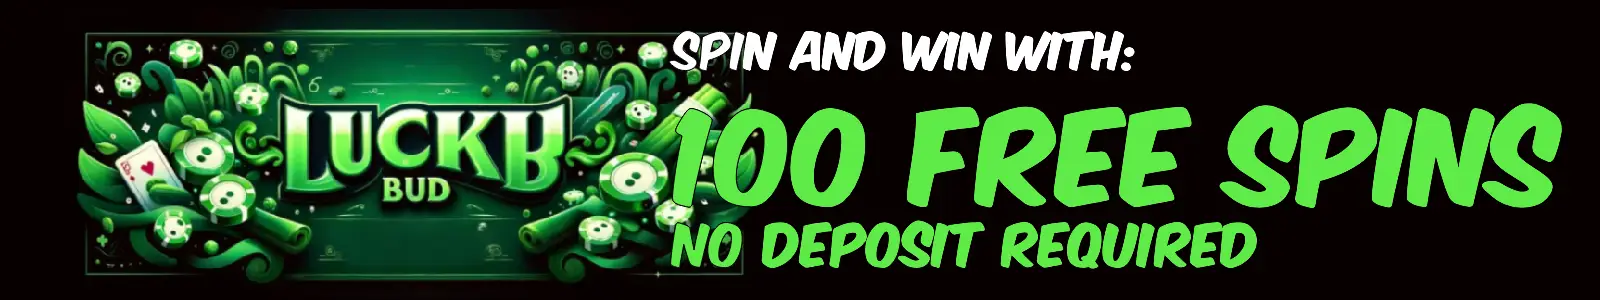 LuckyBud Casino free spins bonus, no deposit required